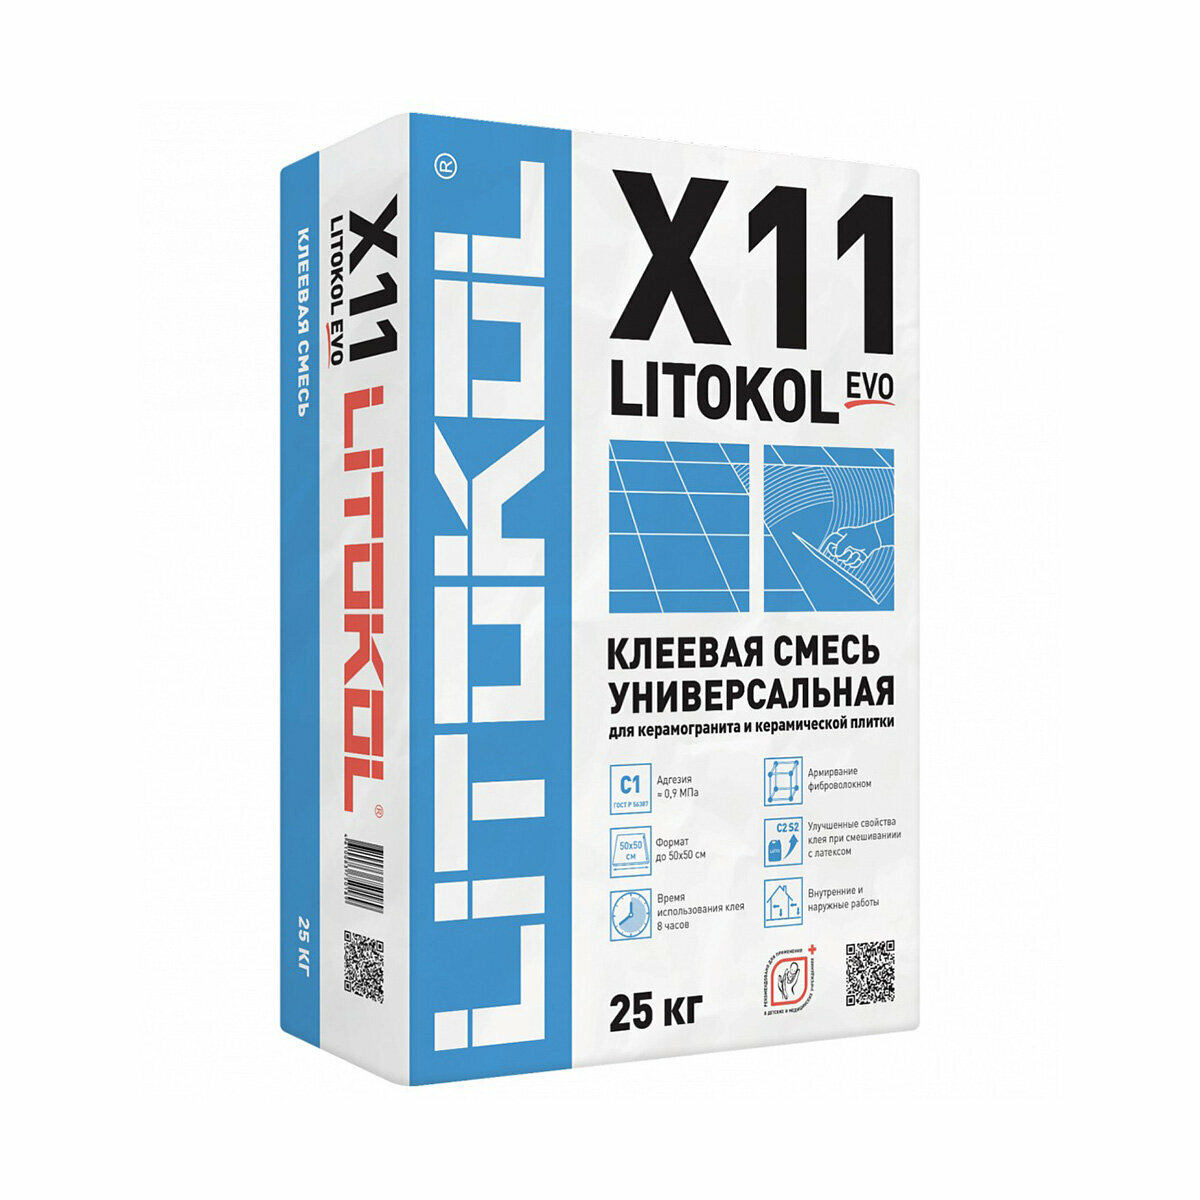      Litokol X11 Evo, 25 